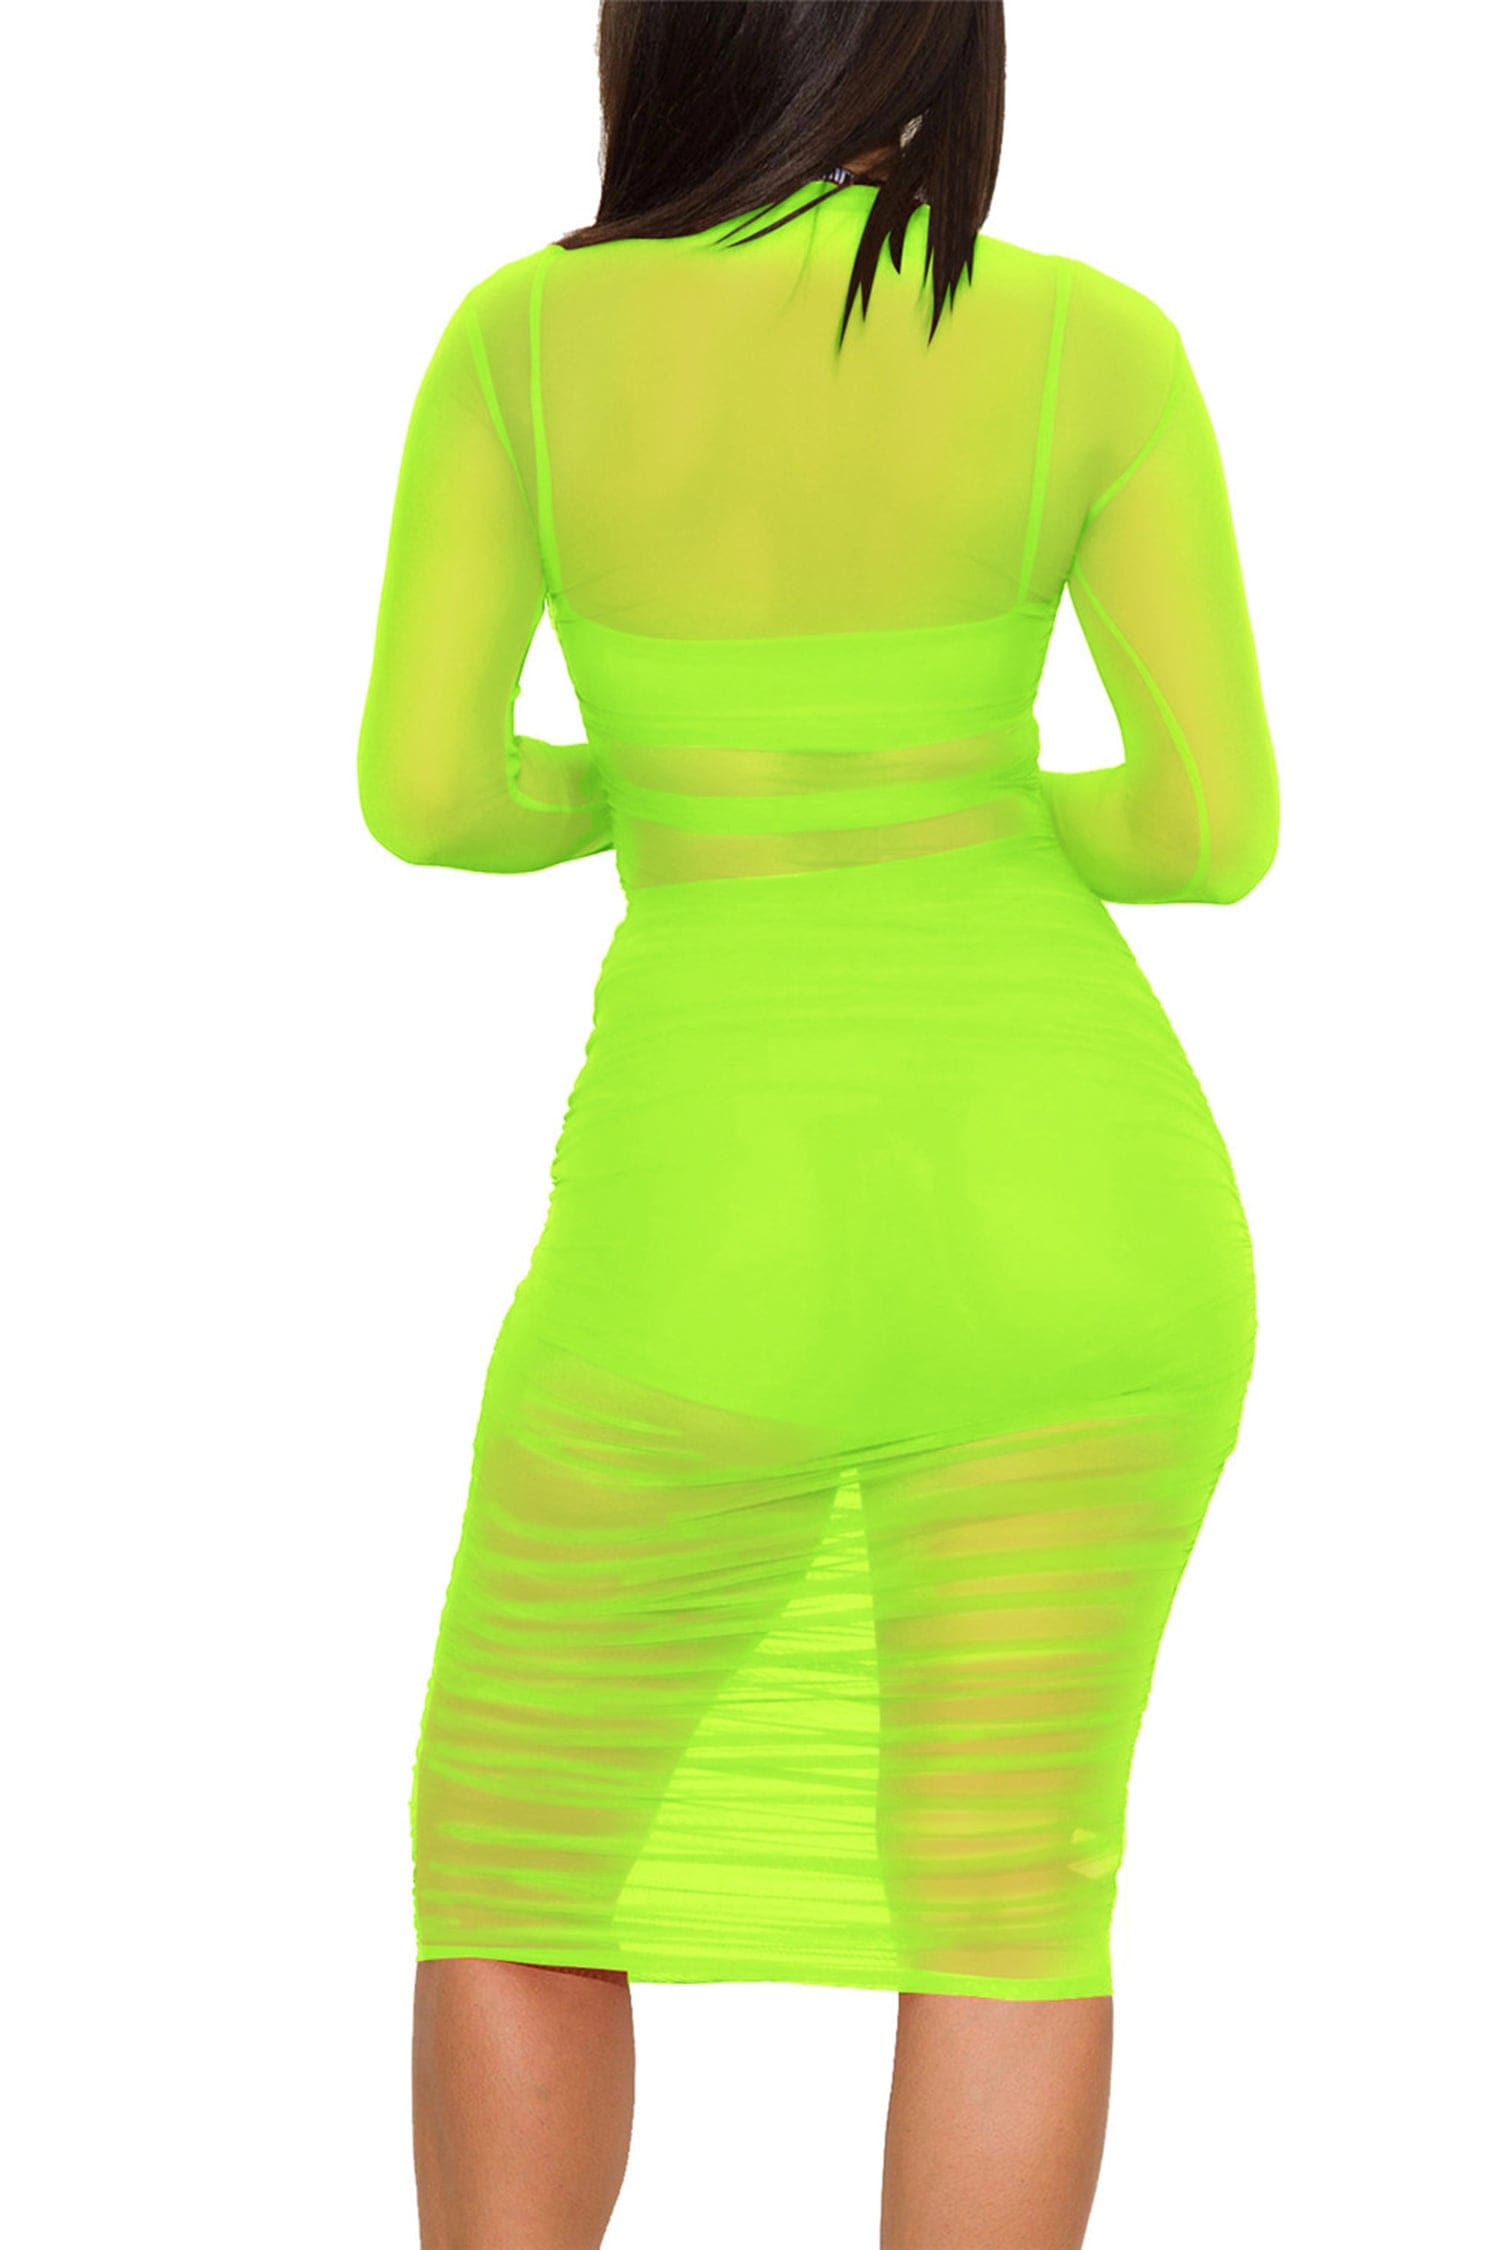 Neon Lime Green Mesh See Trough Dress Dresses